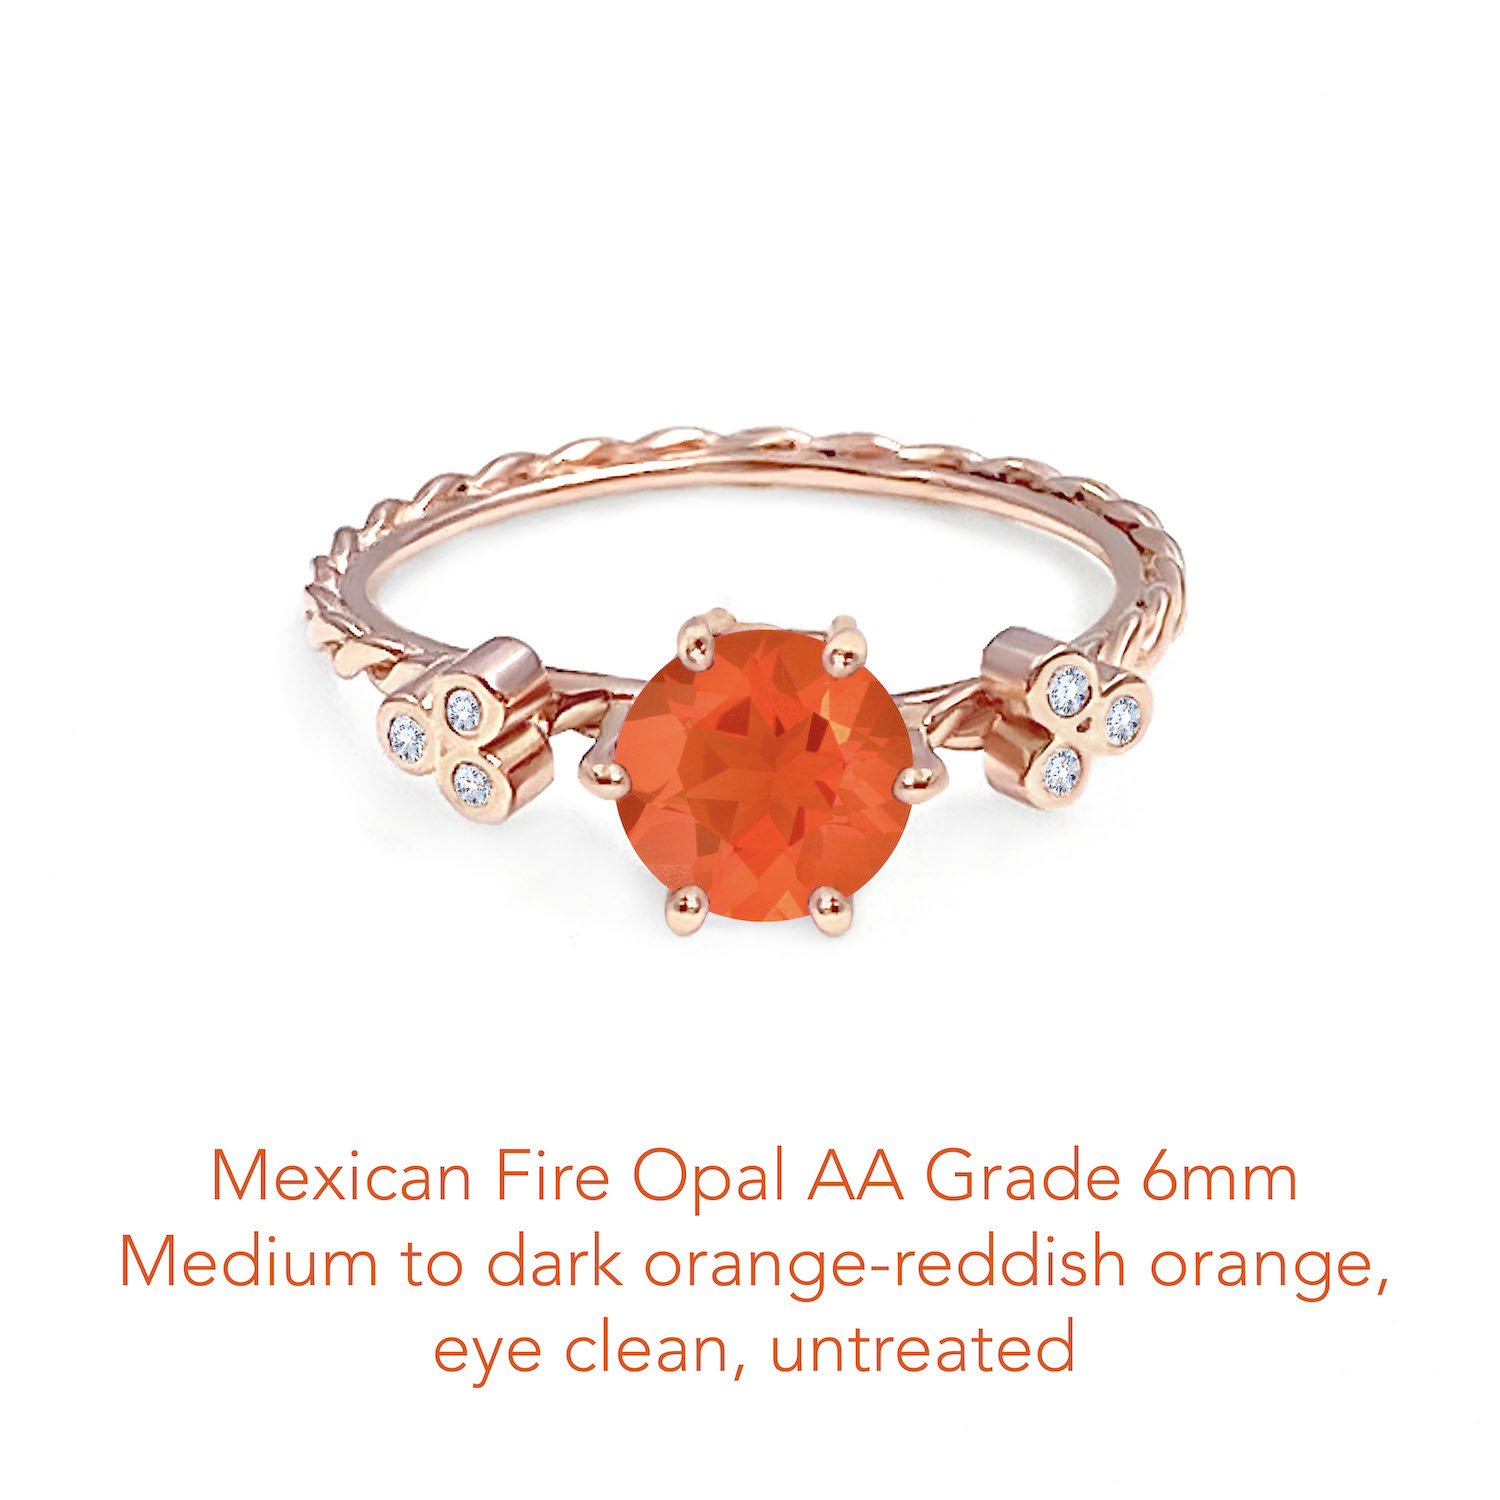 Opal Mexican Fire AA